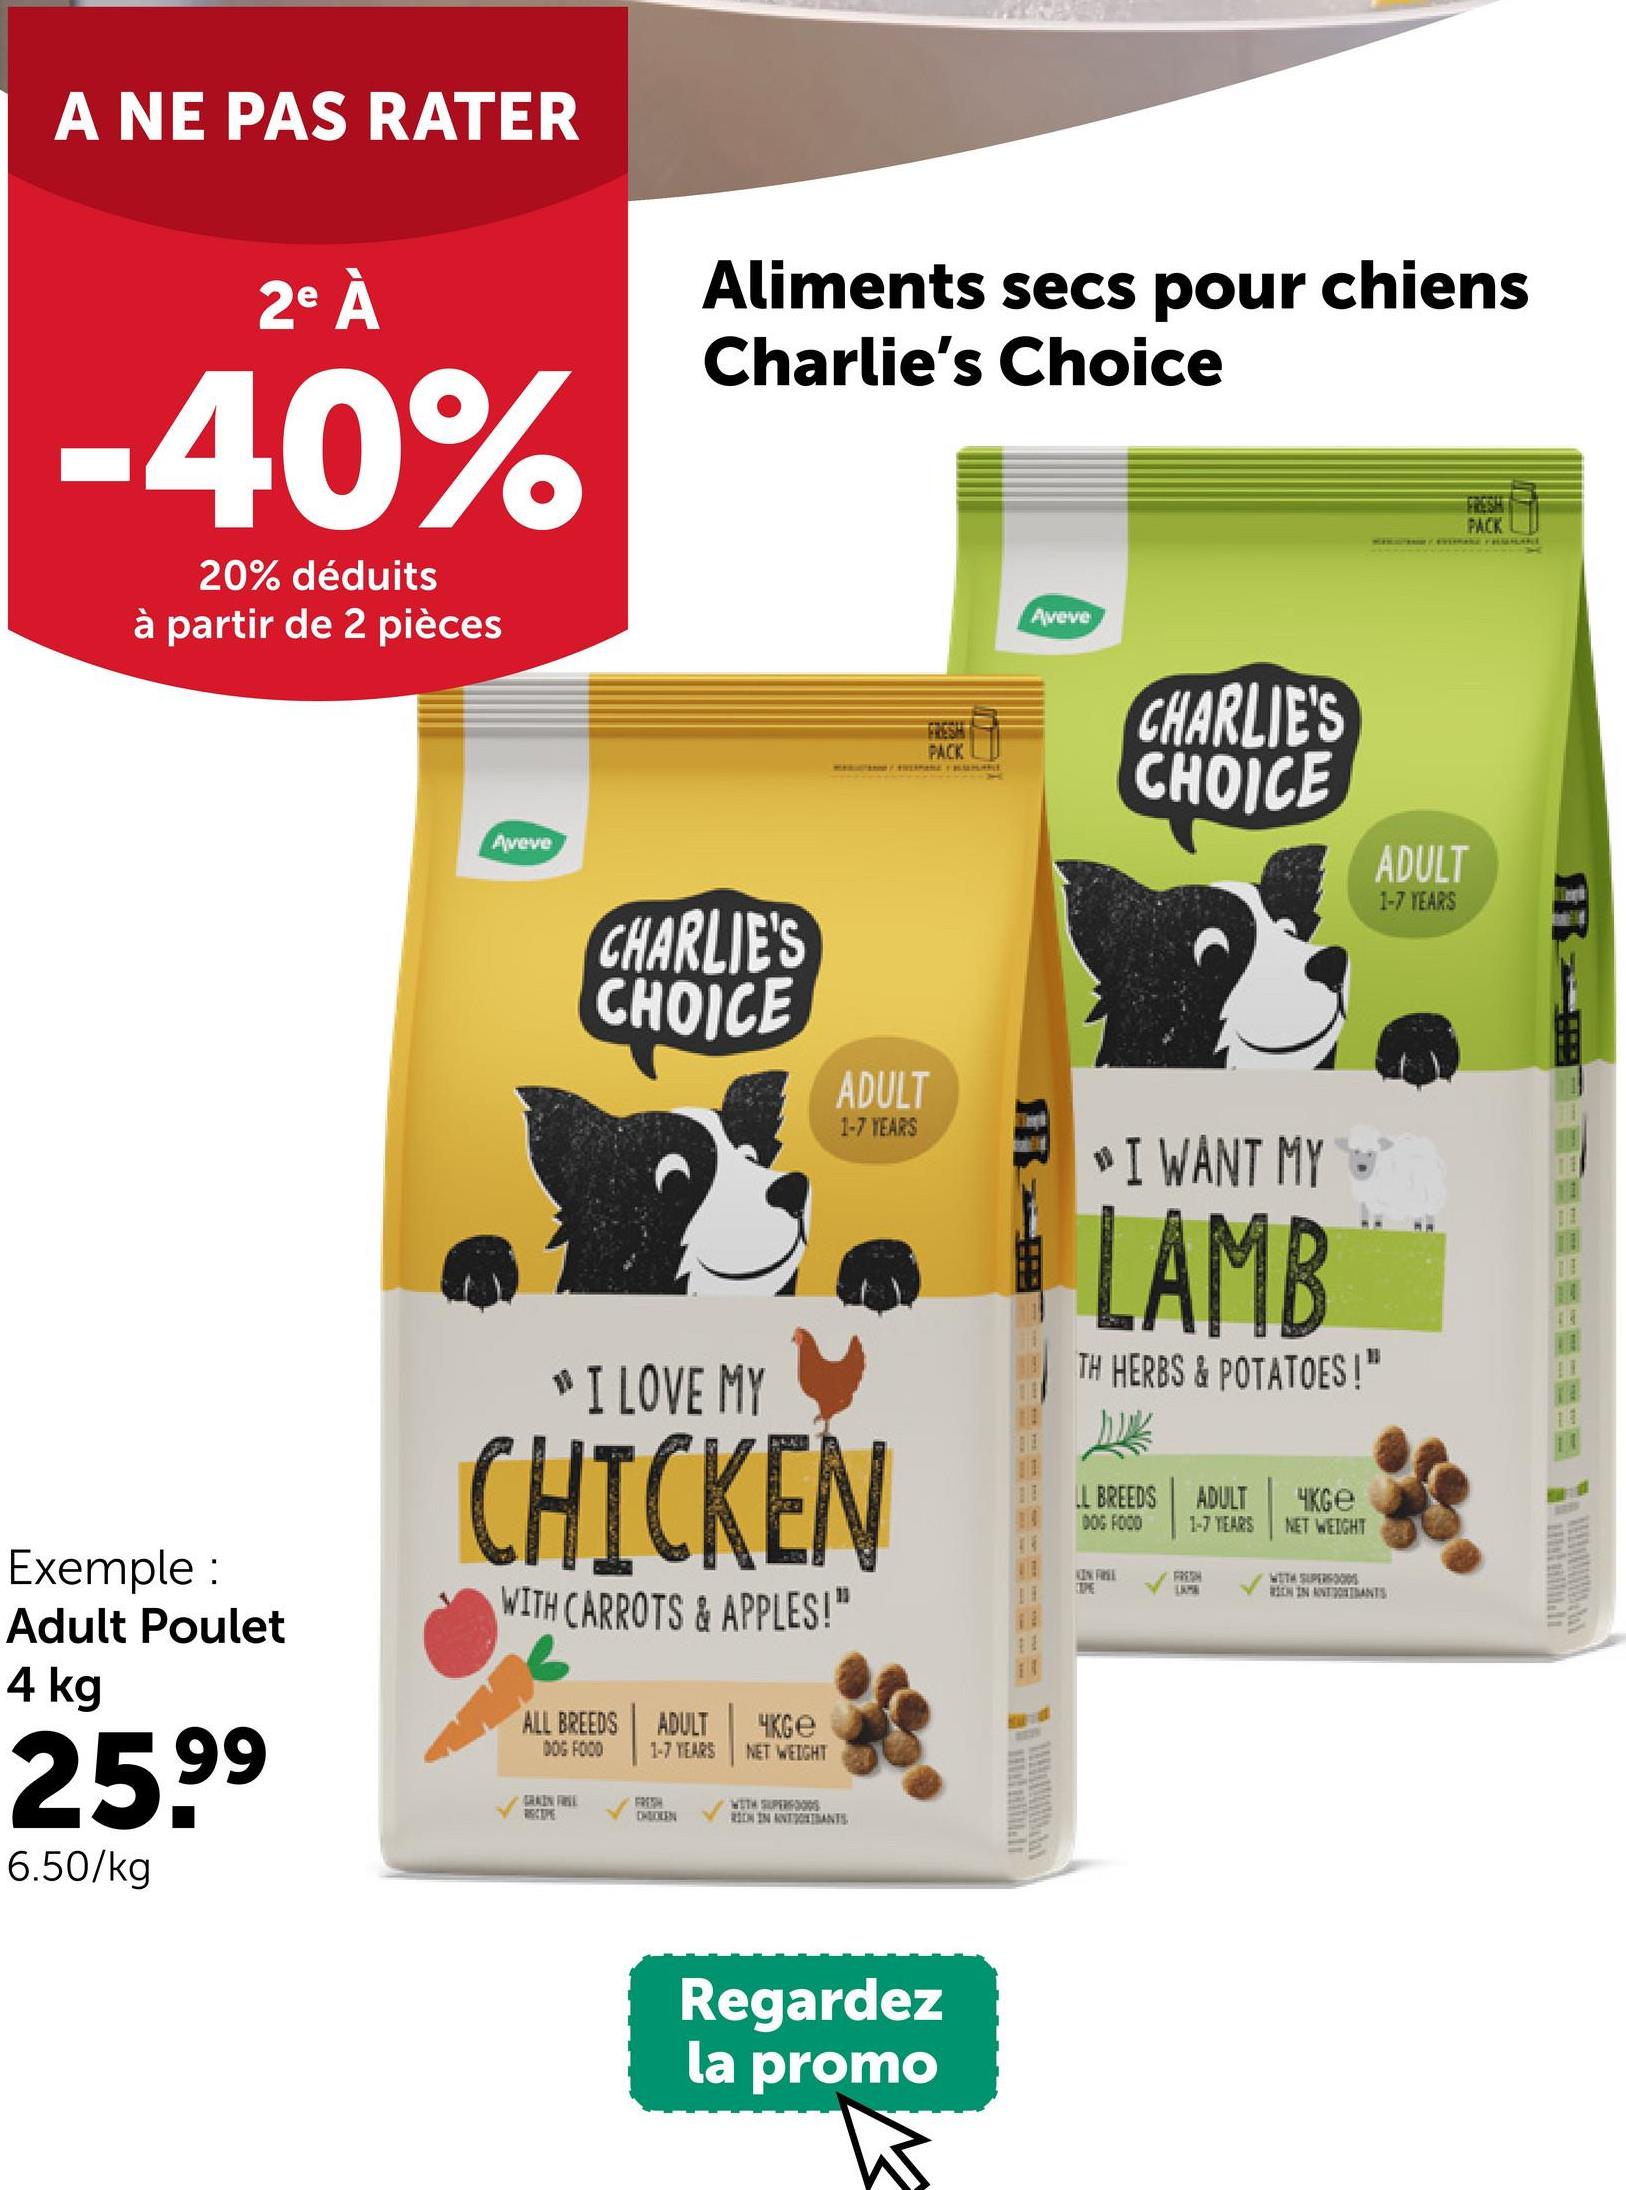 A NE PAS RATER
2e À
-40%
20% déduits
à partir de 2 pièces
Aliments secs pour chiens
Charlie's Choice
Aveve
FRESH
PACK
Aveve
CHARLIE'S
CHOICE
ADULT
1-7 YEARS
FRESH
PACK
CHARLIE'S
CHOICE
ADULT
1-7 YEARS
Exemple :
Adult Poulet
4 kg
25.99
6.50/kg
"I LOVE MY
CHICKEN
WITH CARROTS & APPLES!"
ALL BREEDS
DOG FOOD
GRAIN FREE
RECIPE
ADULT
1-7 YEARS
FREEH
CHICKEN
чKGe
NET WEIGHT
WITH SUPERFOOD
REN IN ANTONIANS
IR
I WANT MY
LAMB
TH HERBS & POTATOES!"
LL BREEDS
DOG FOOD
ADULT
1-7 YEARS
Чксе
NET WEIGHT
KIN FREE
FRESH
WITH SUPERFOODS
TOPE
I
LAPA
RIEN IN ATTANTS
Regardez
la promo